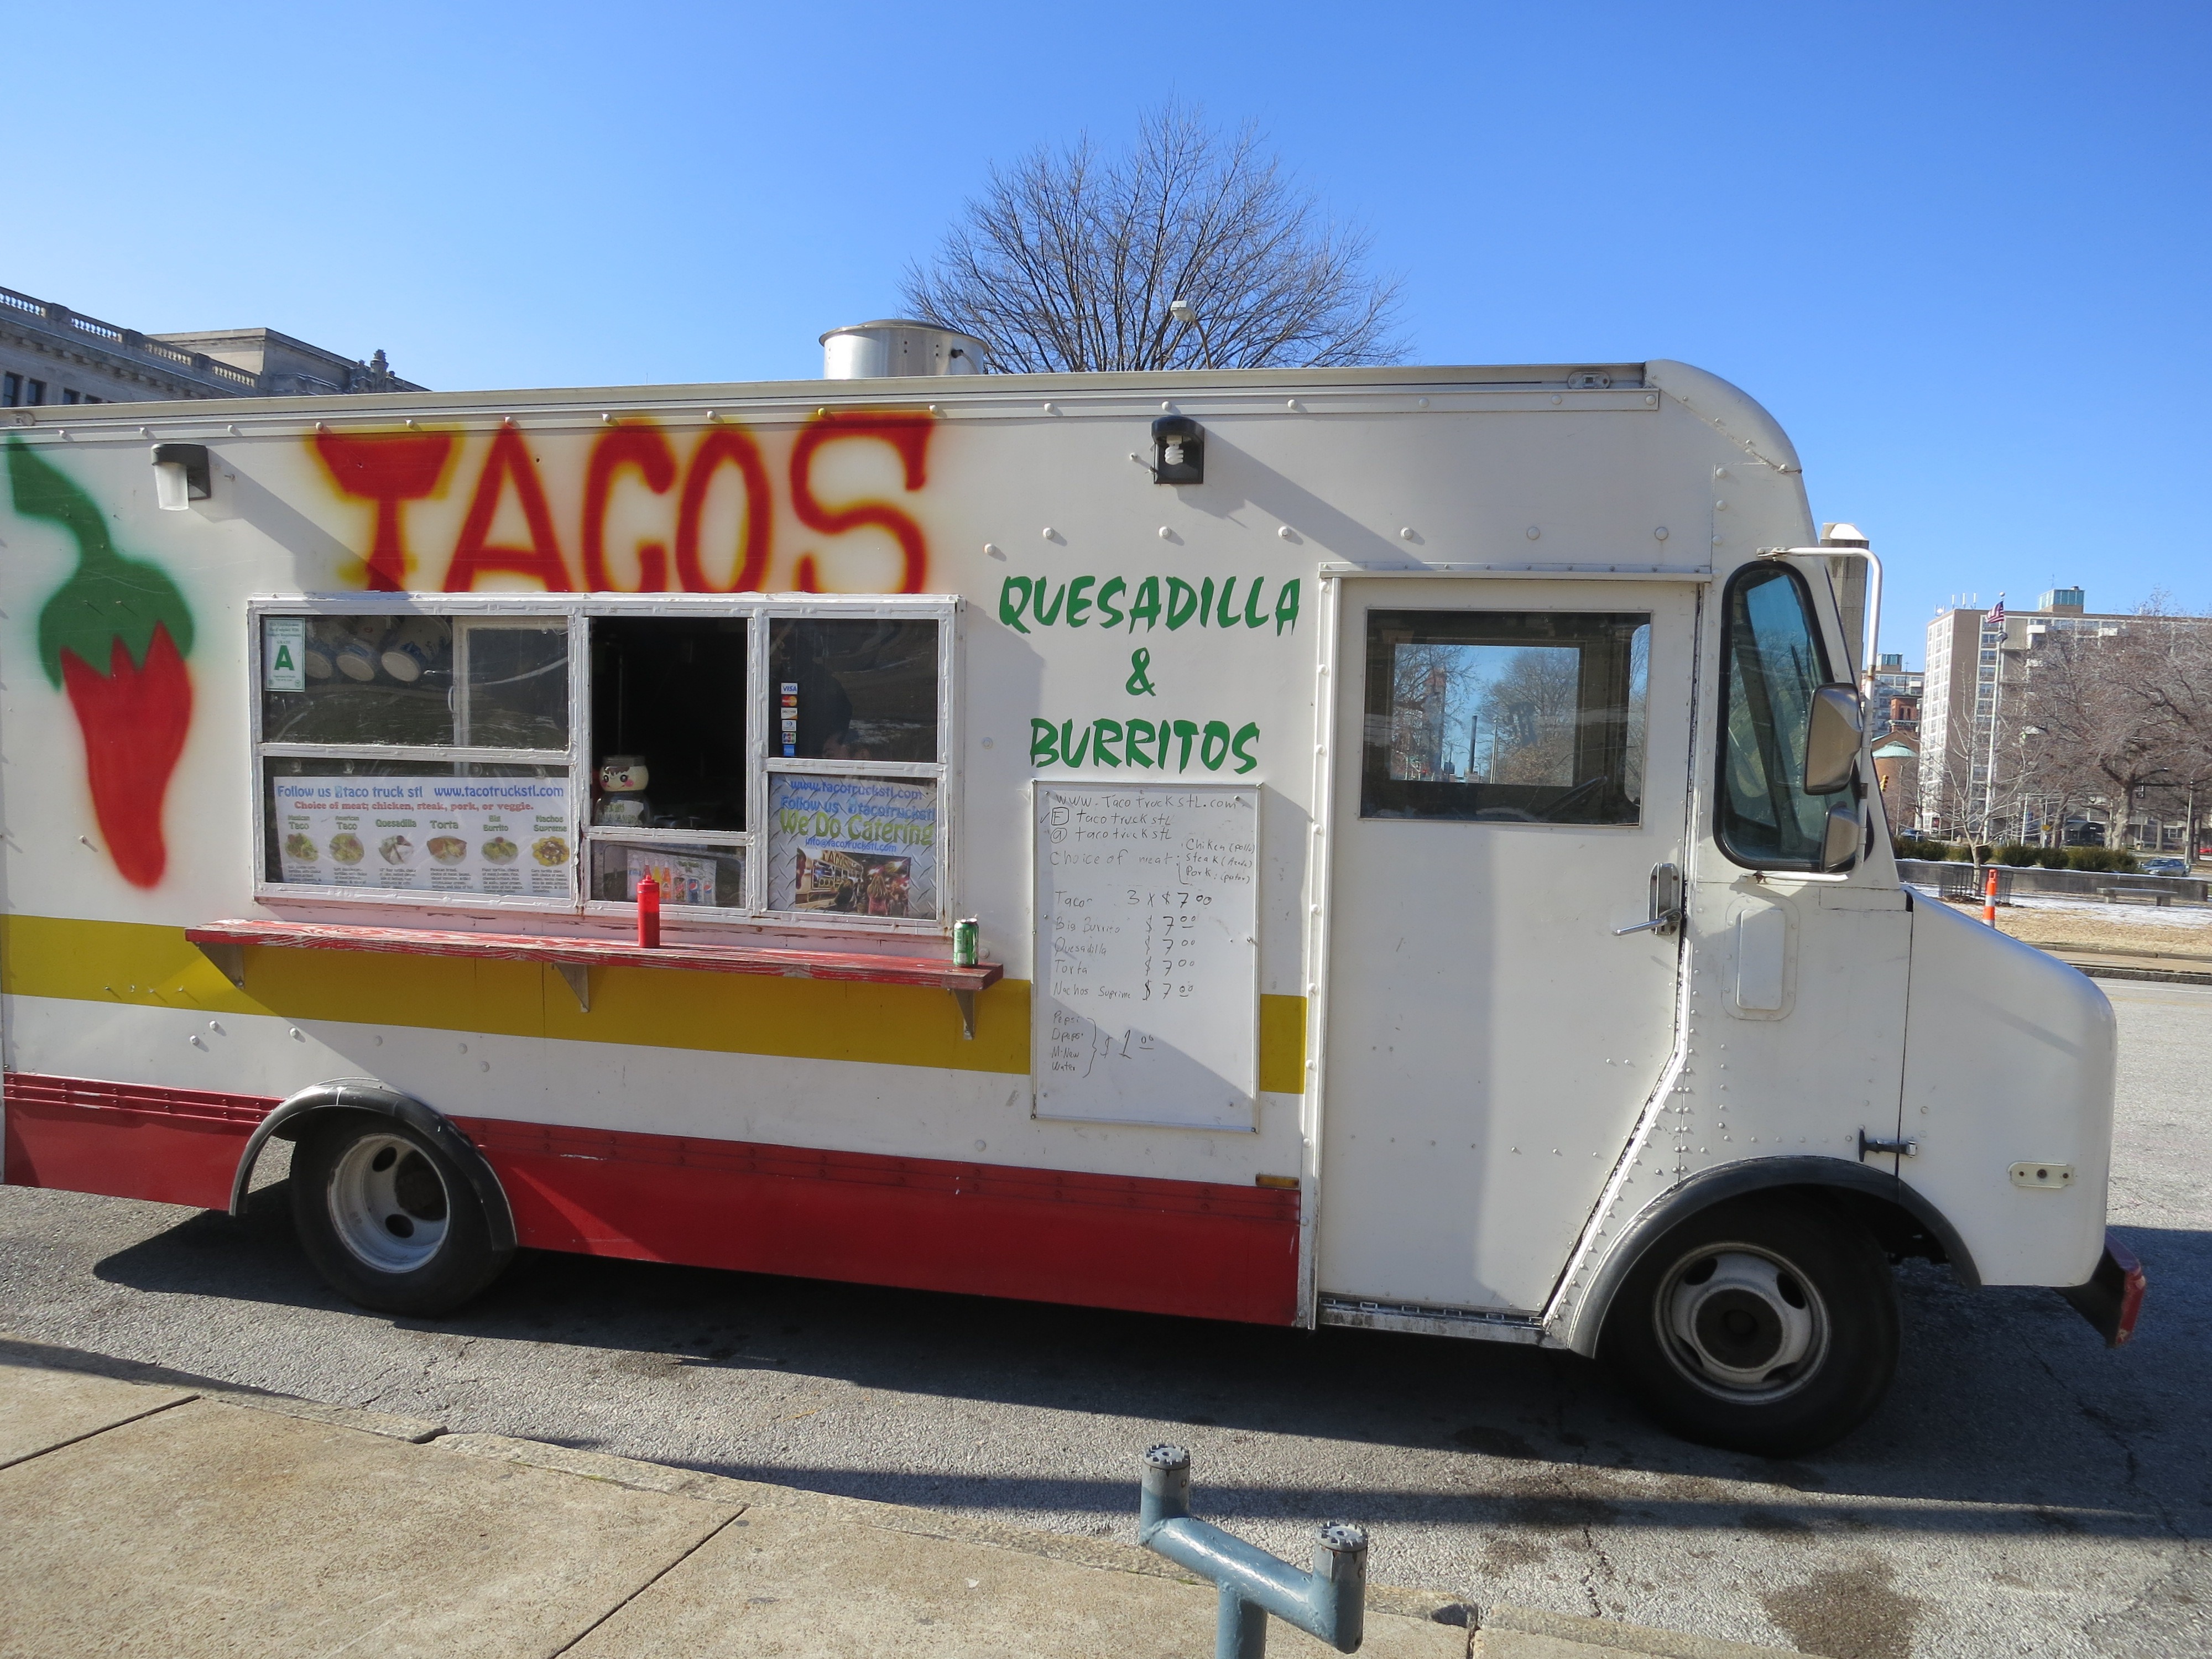 A taco truck in St. Louis, Missouri.